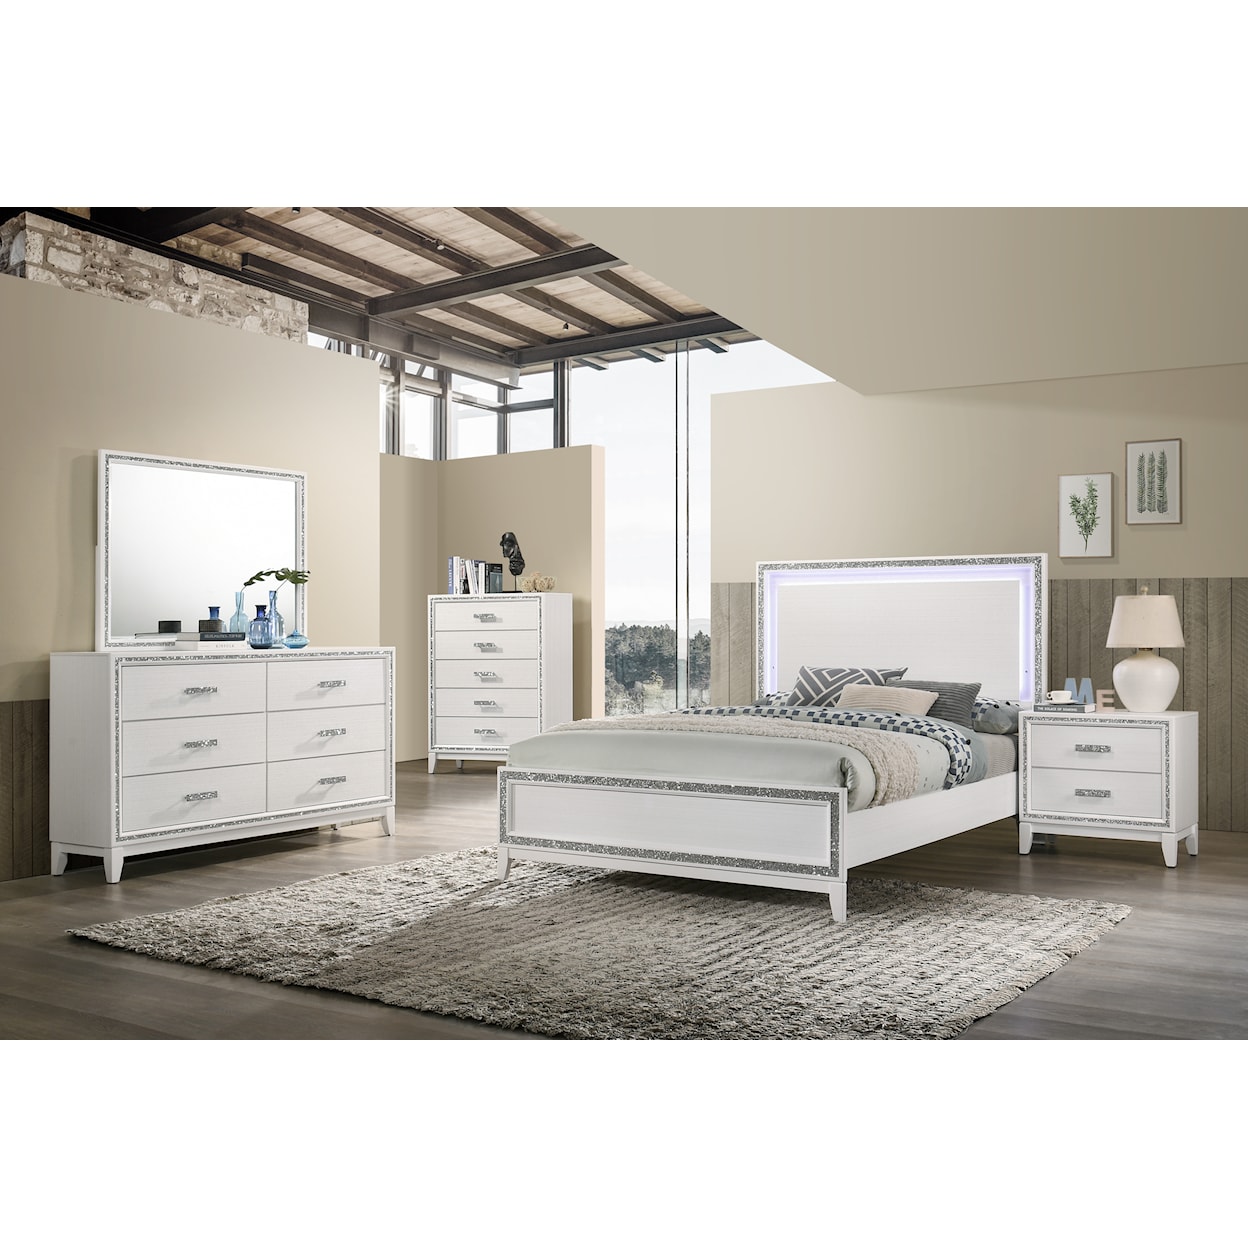 Acme Furniture Haiden 7pc Queen Bedroom Group